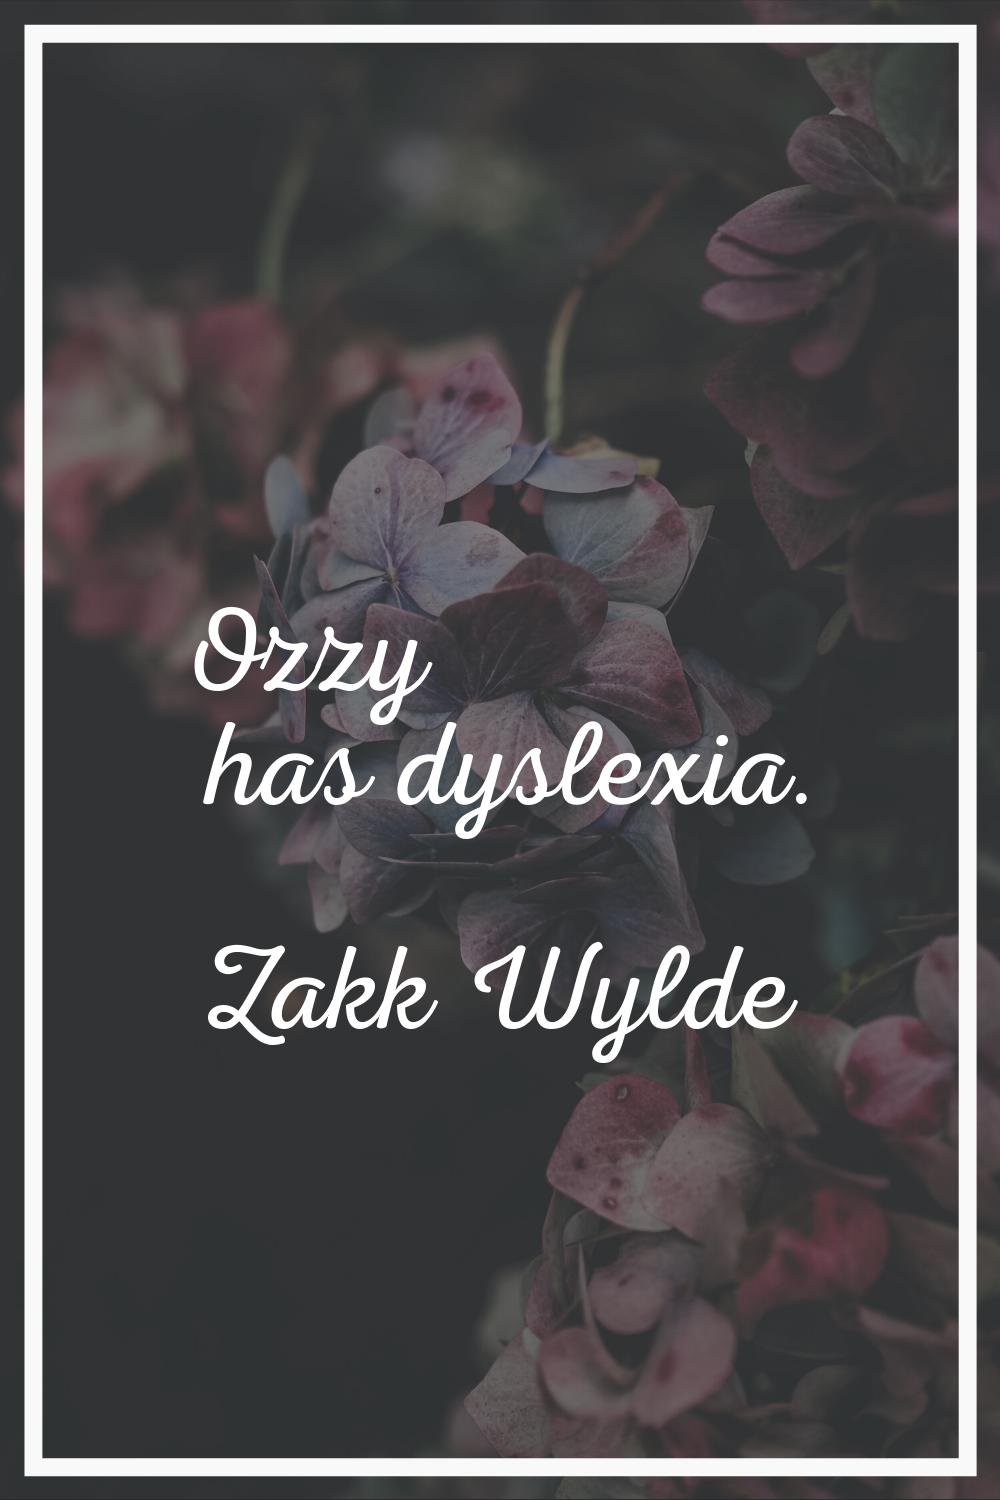 Ozzy has dyslexia.